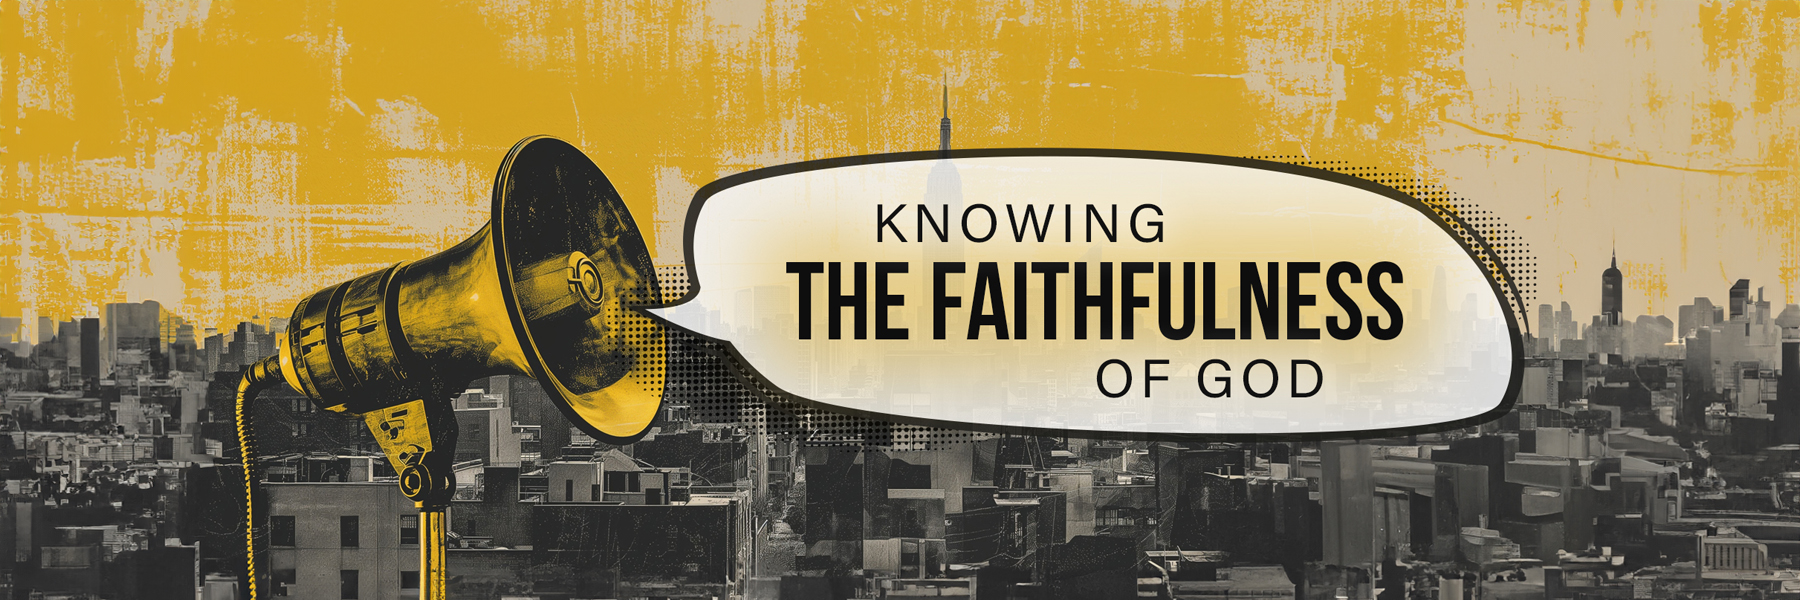 Knowing the Faithfulness of God